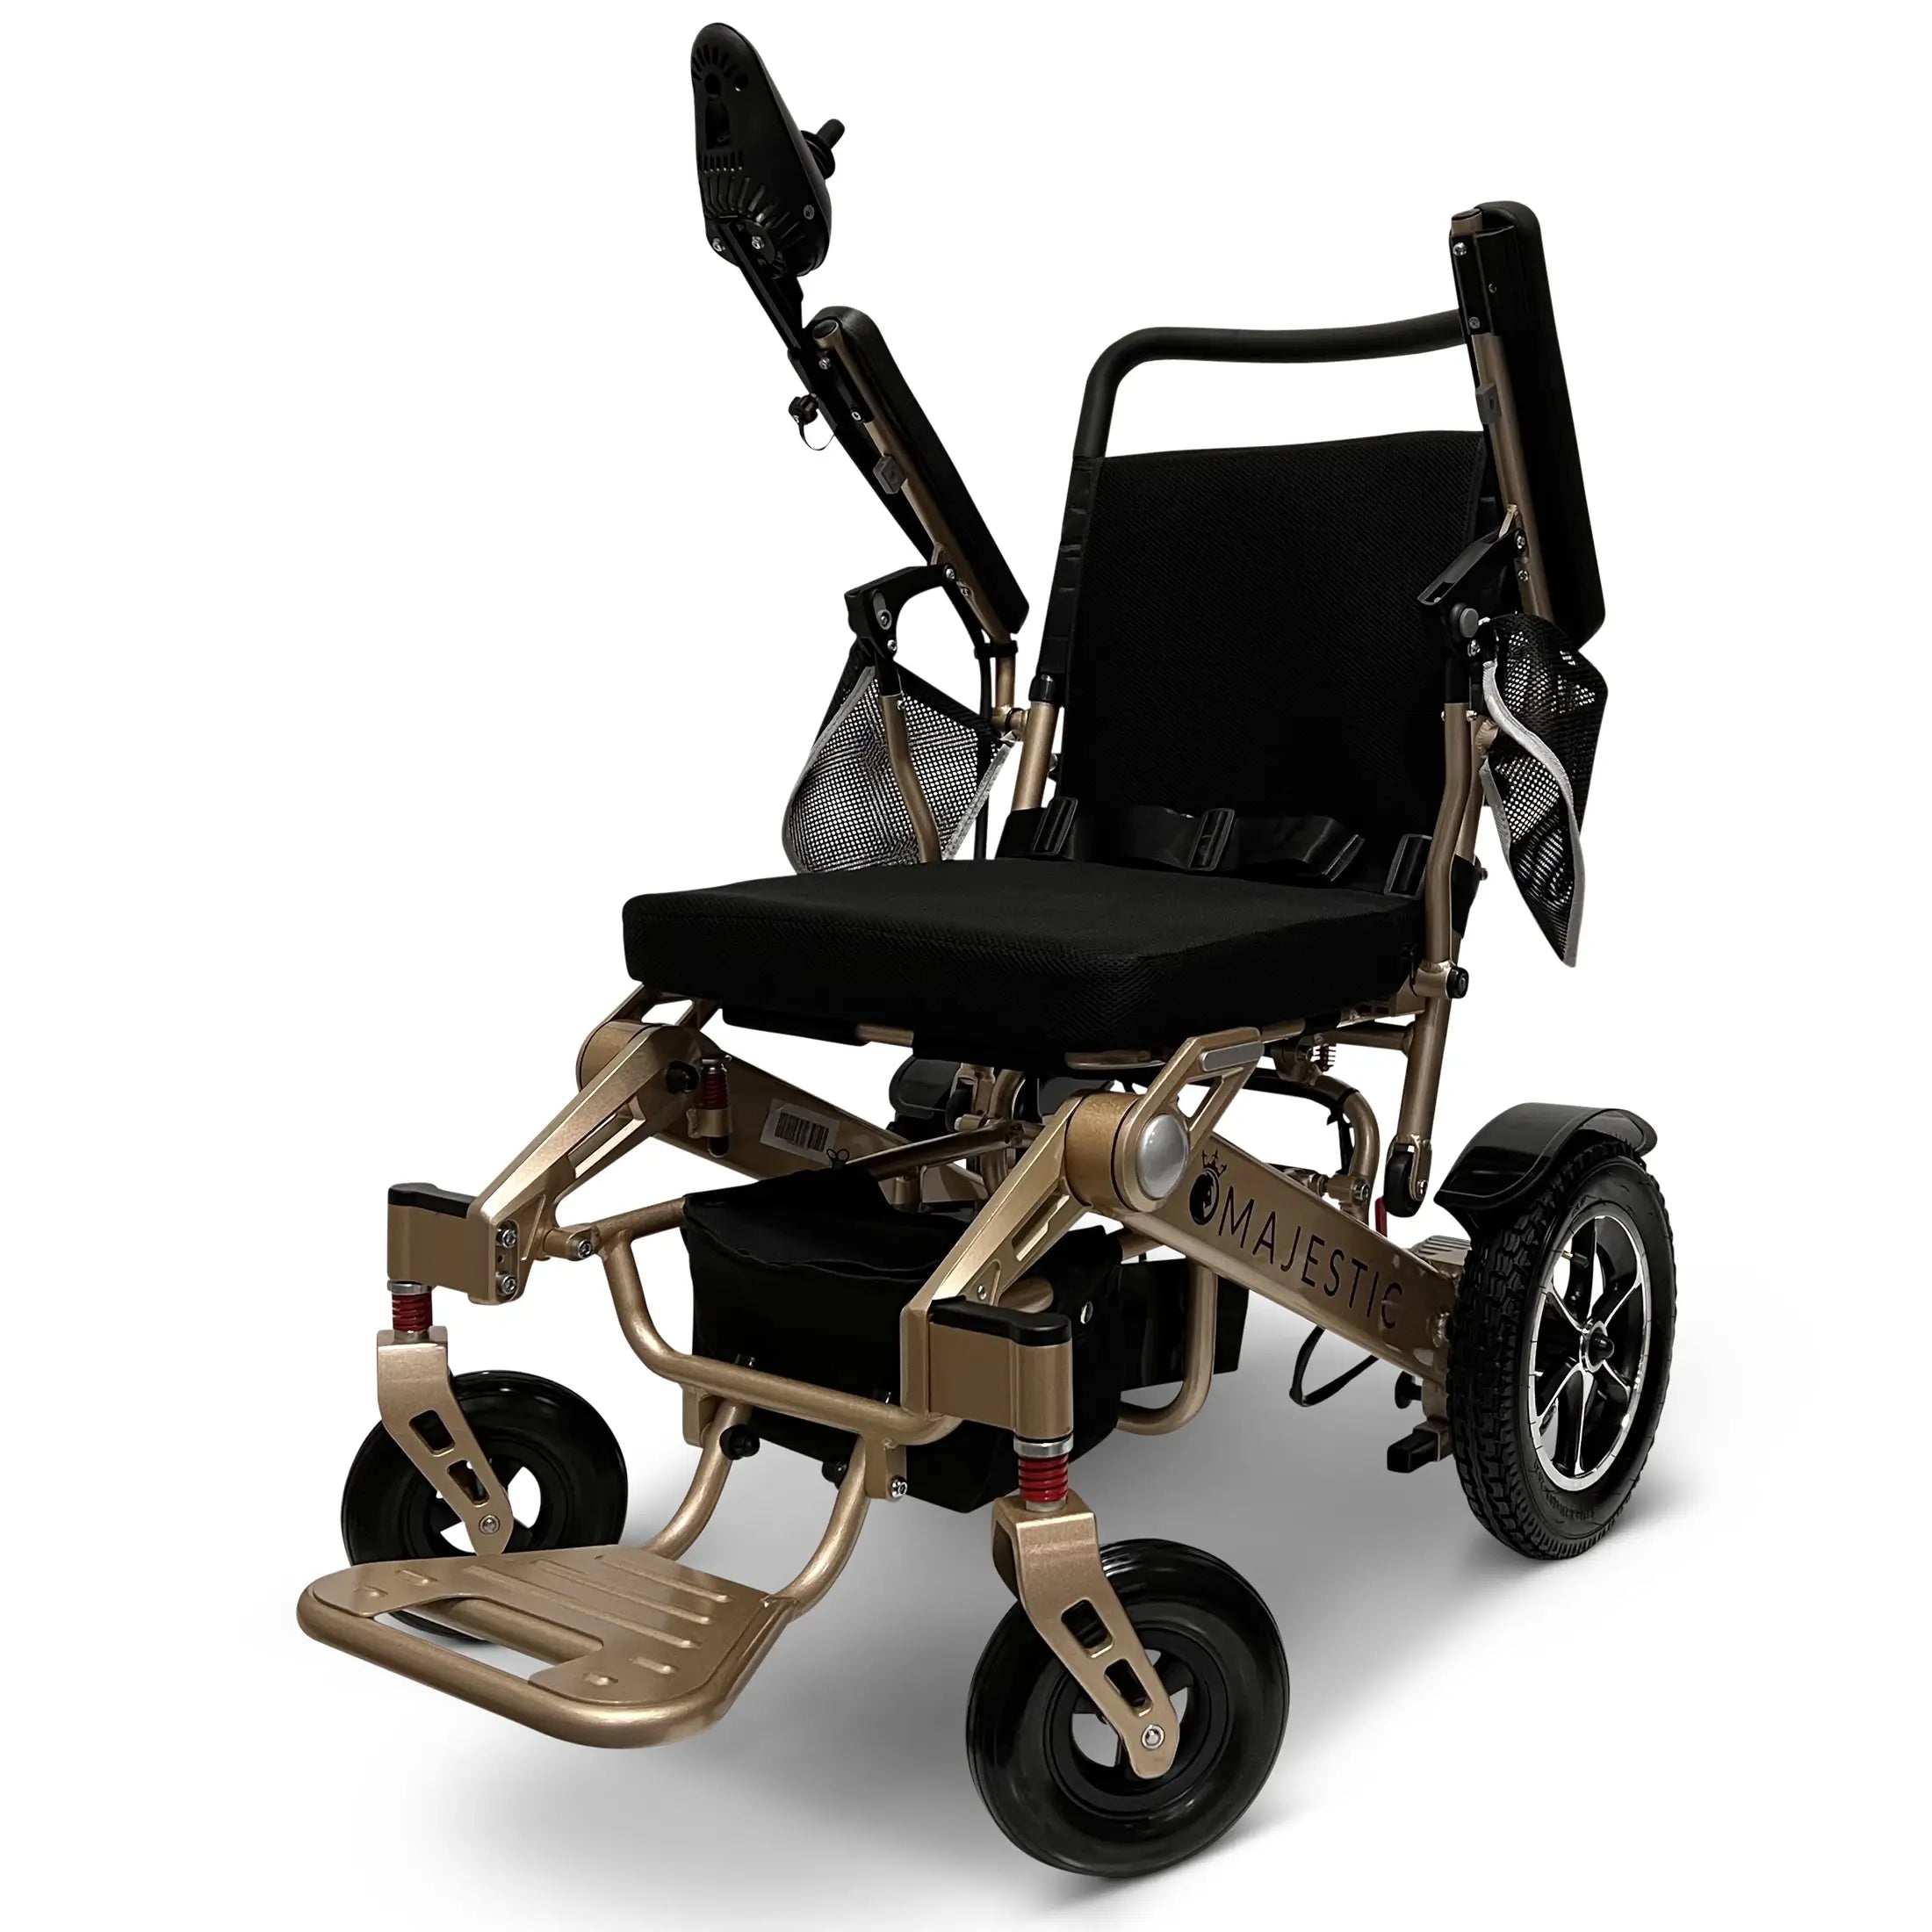 Comfygo Majestic IQ-7000 Auto Folding Electric Wheelchair